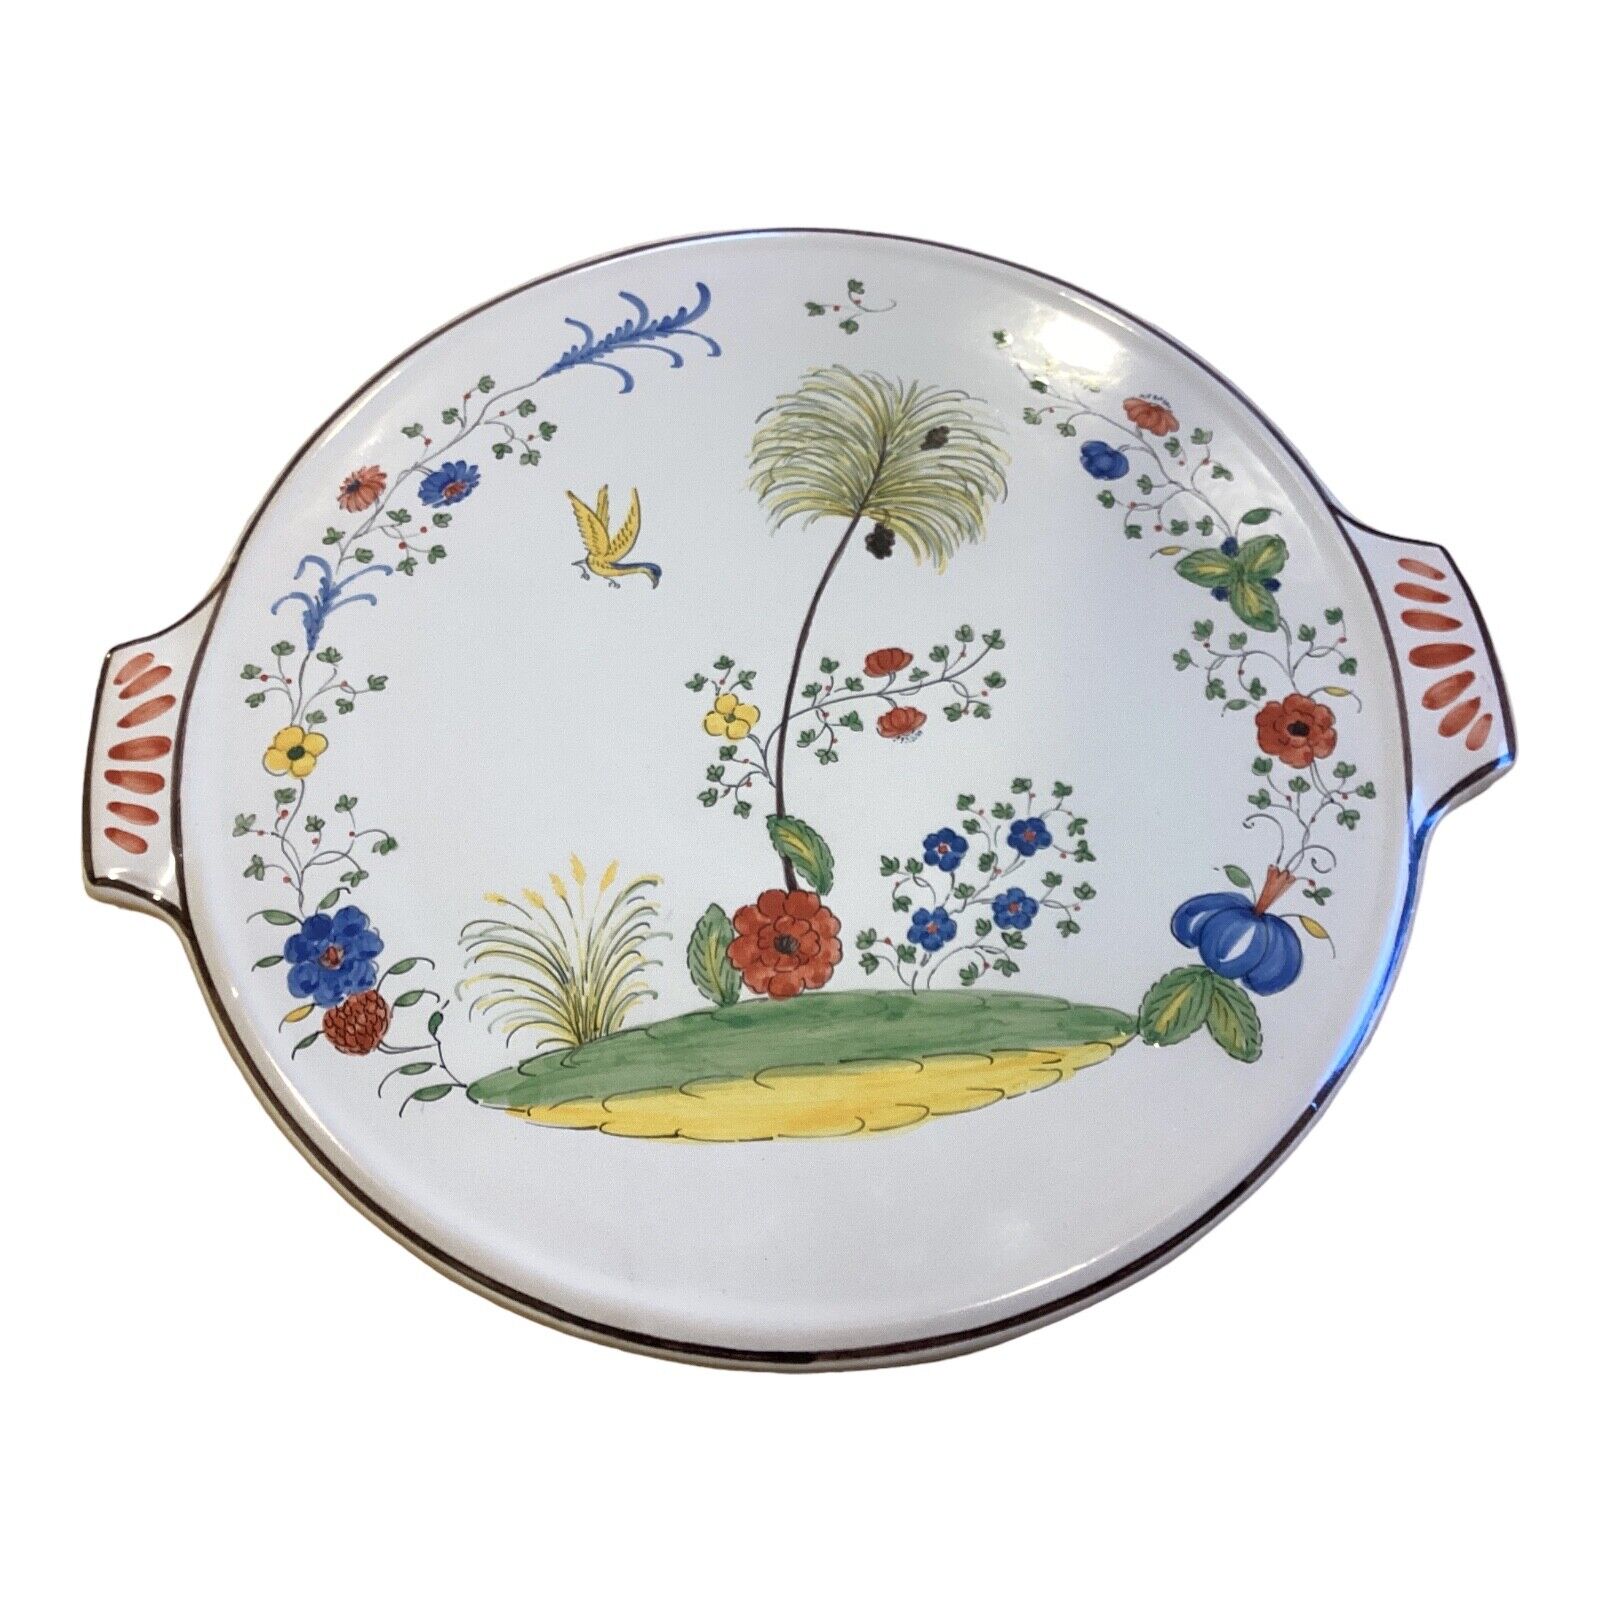 Faiencerie d'Art de Malicorne, French Provence Pottery - White Serving Platter